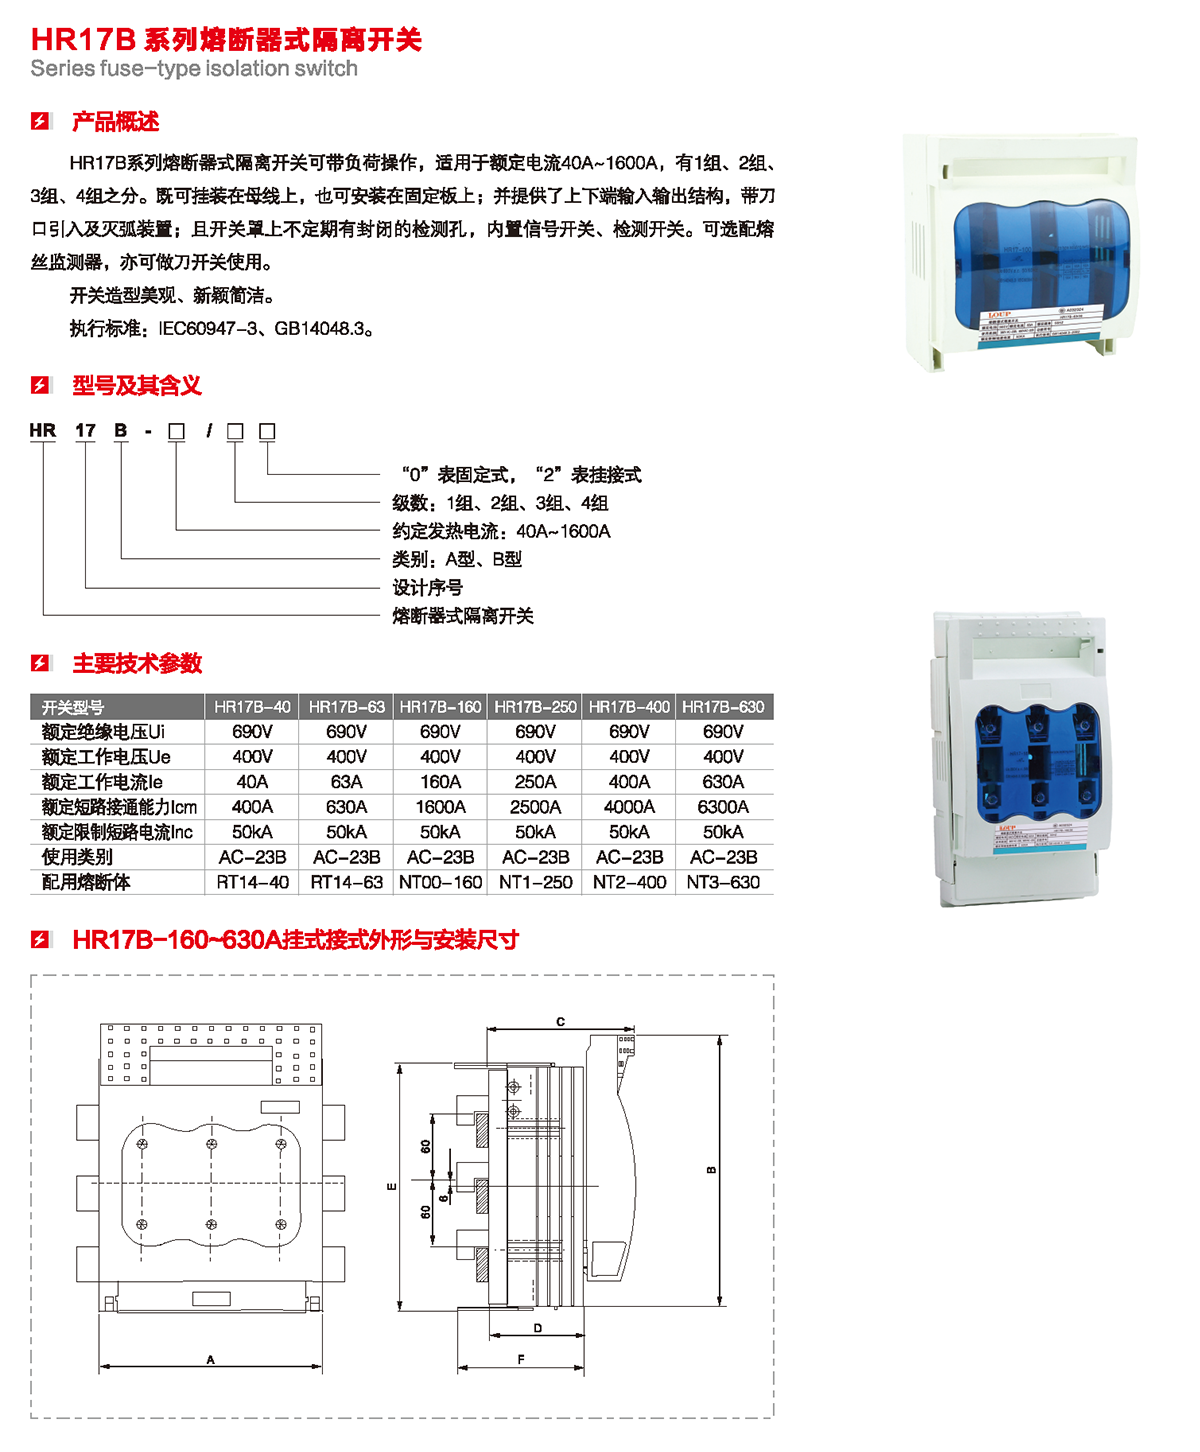 HR17B系列熔断器式隔离开关产品概述、型号含义、技术参数